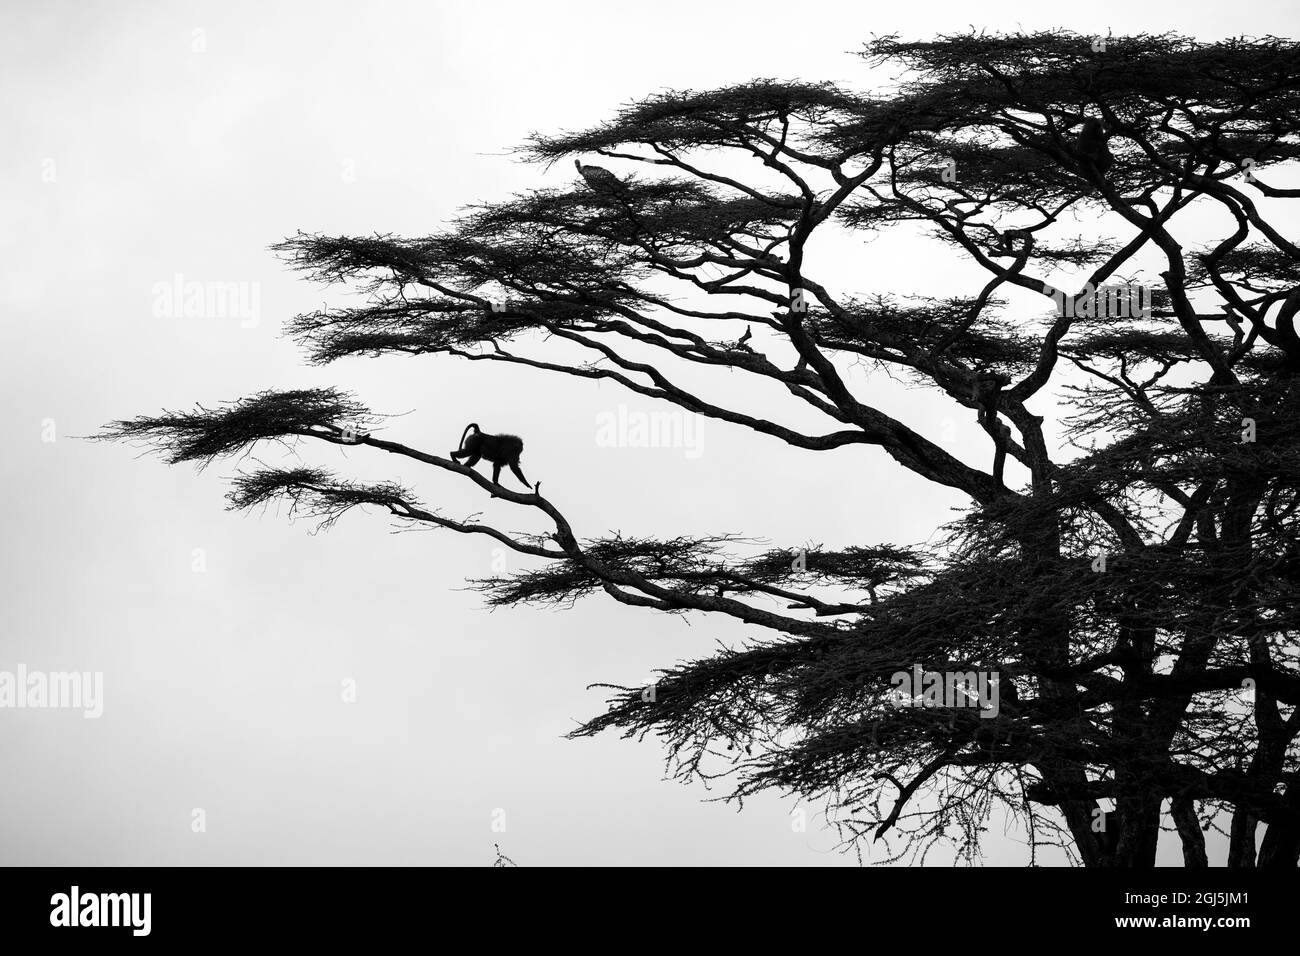 Acacia tree Black and White Stock Photos & Images - Alamy